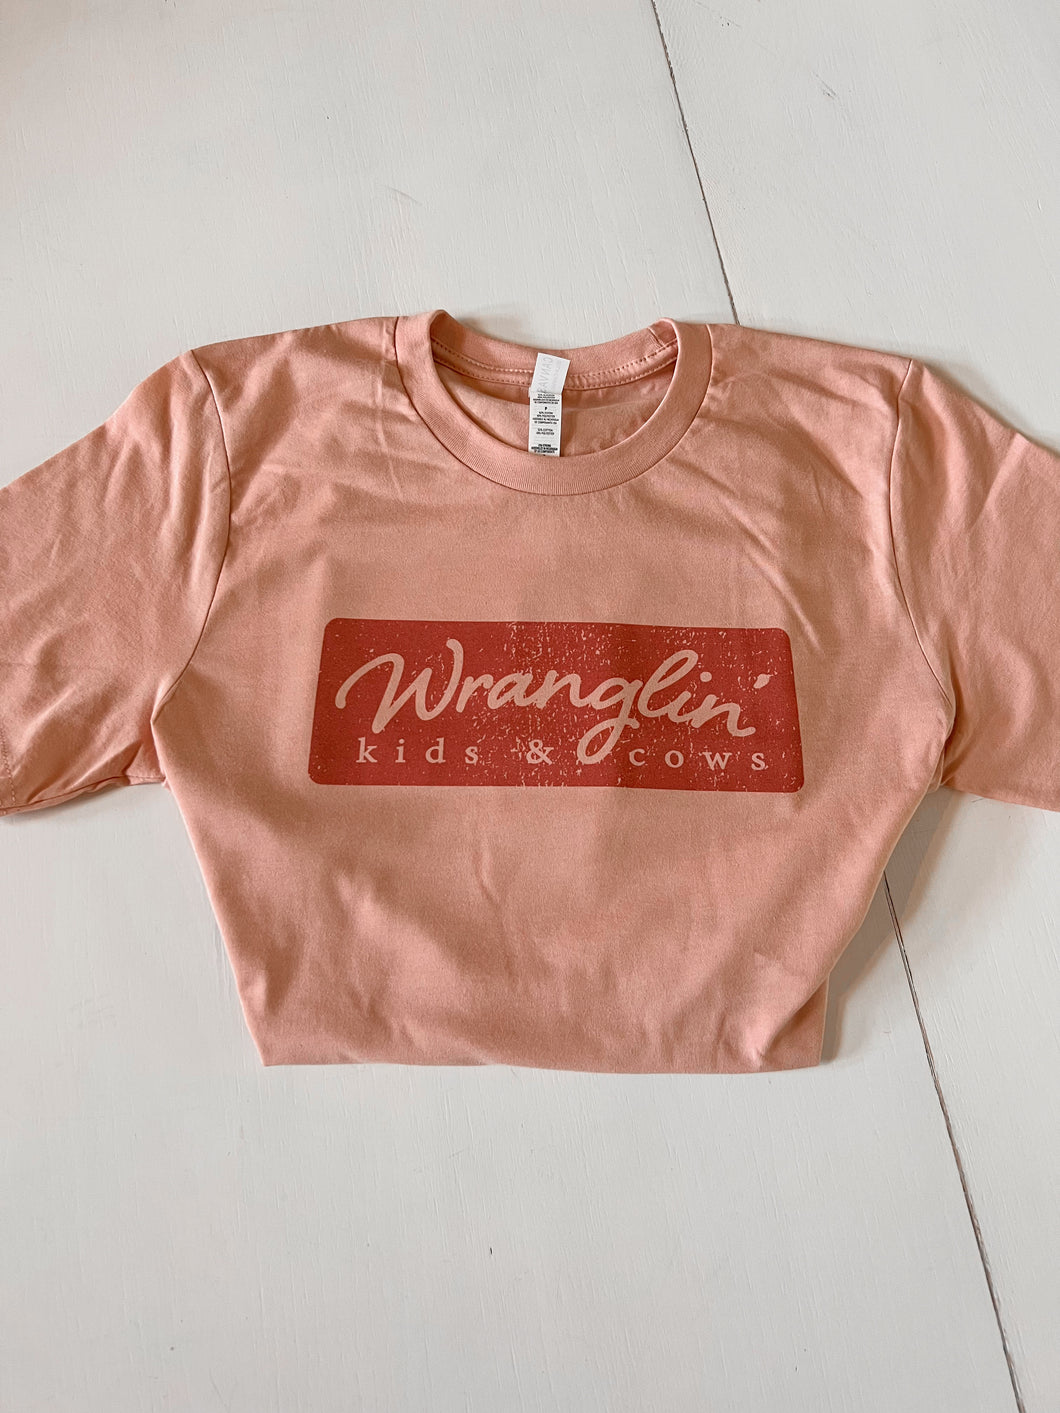 Wranglin’ Kids & Cows T-Shirt